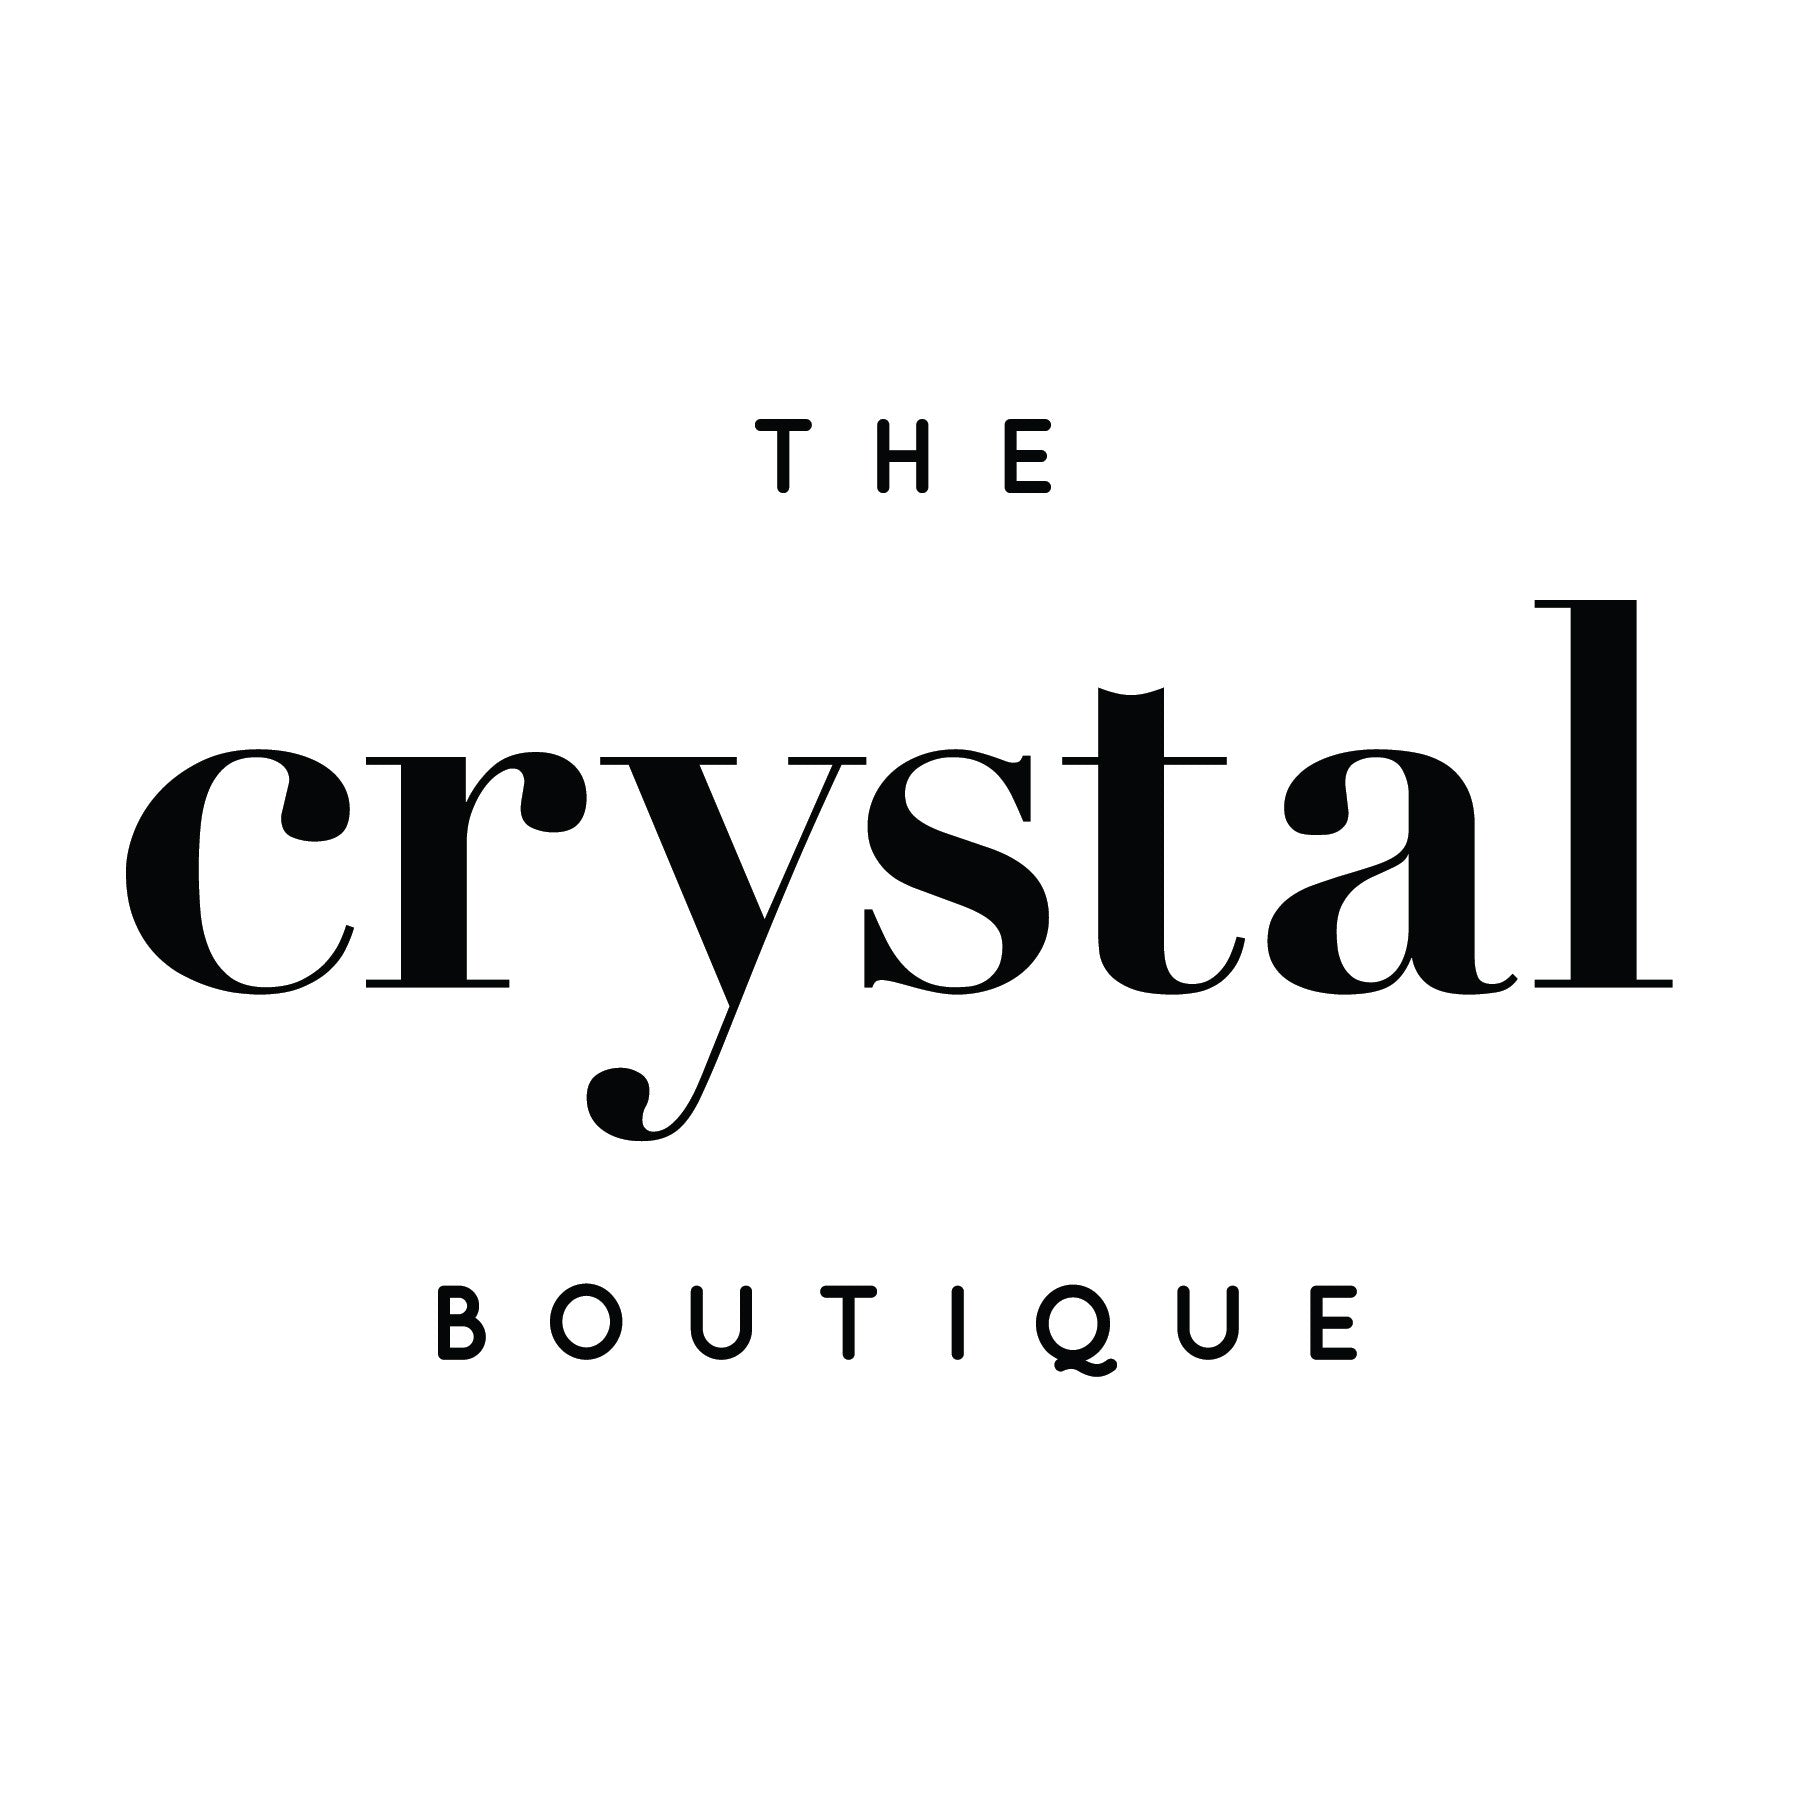 Crystal boutique